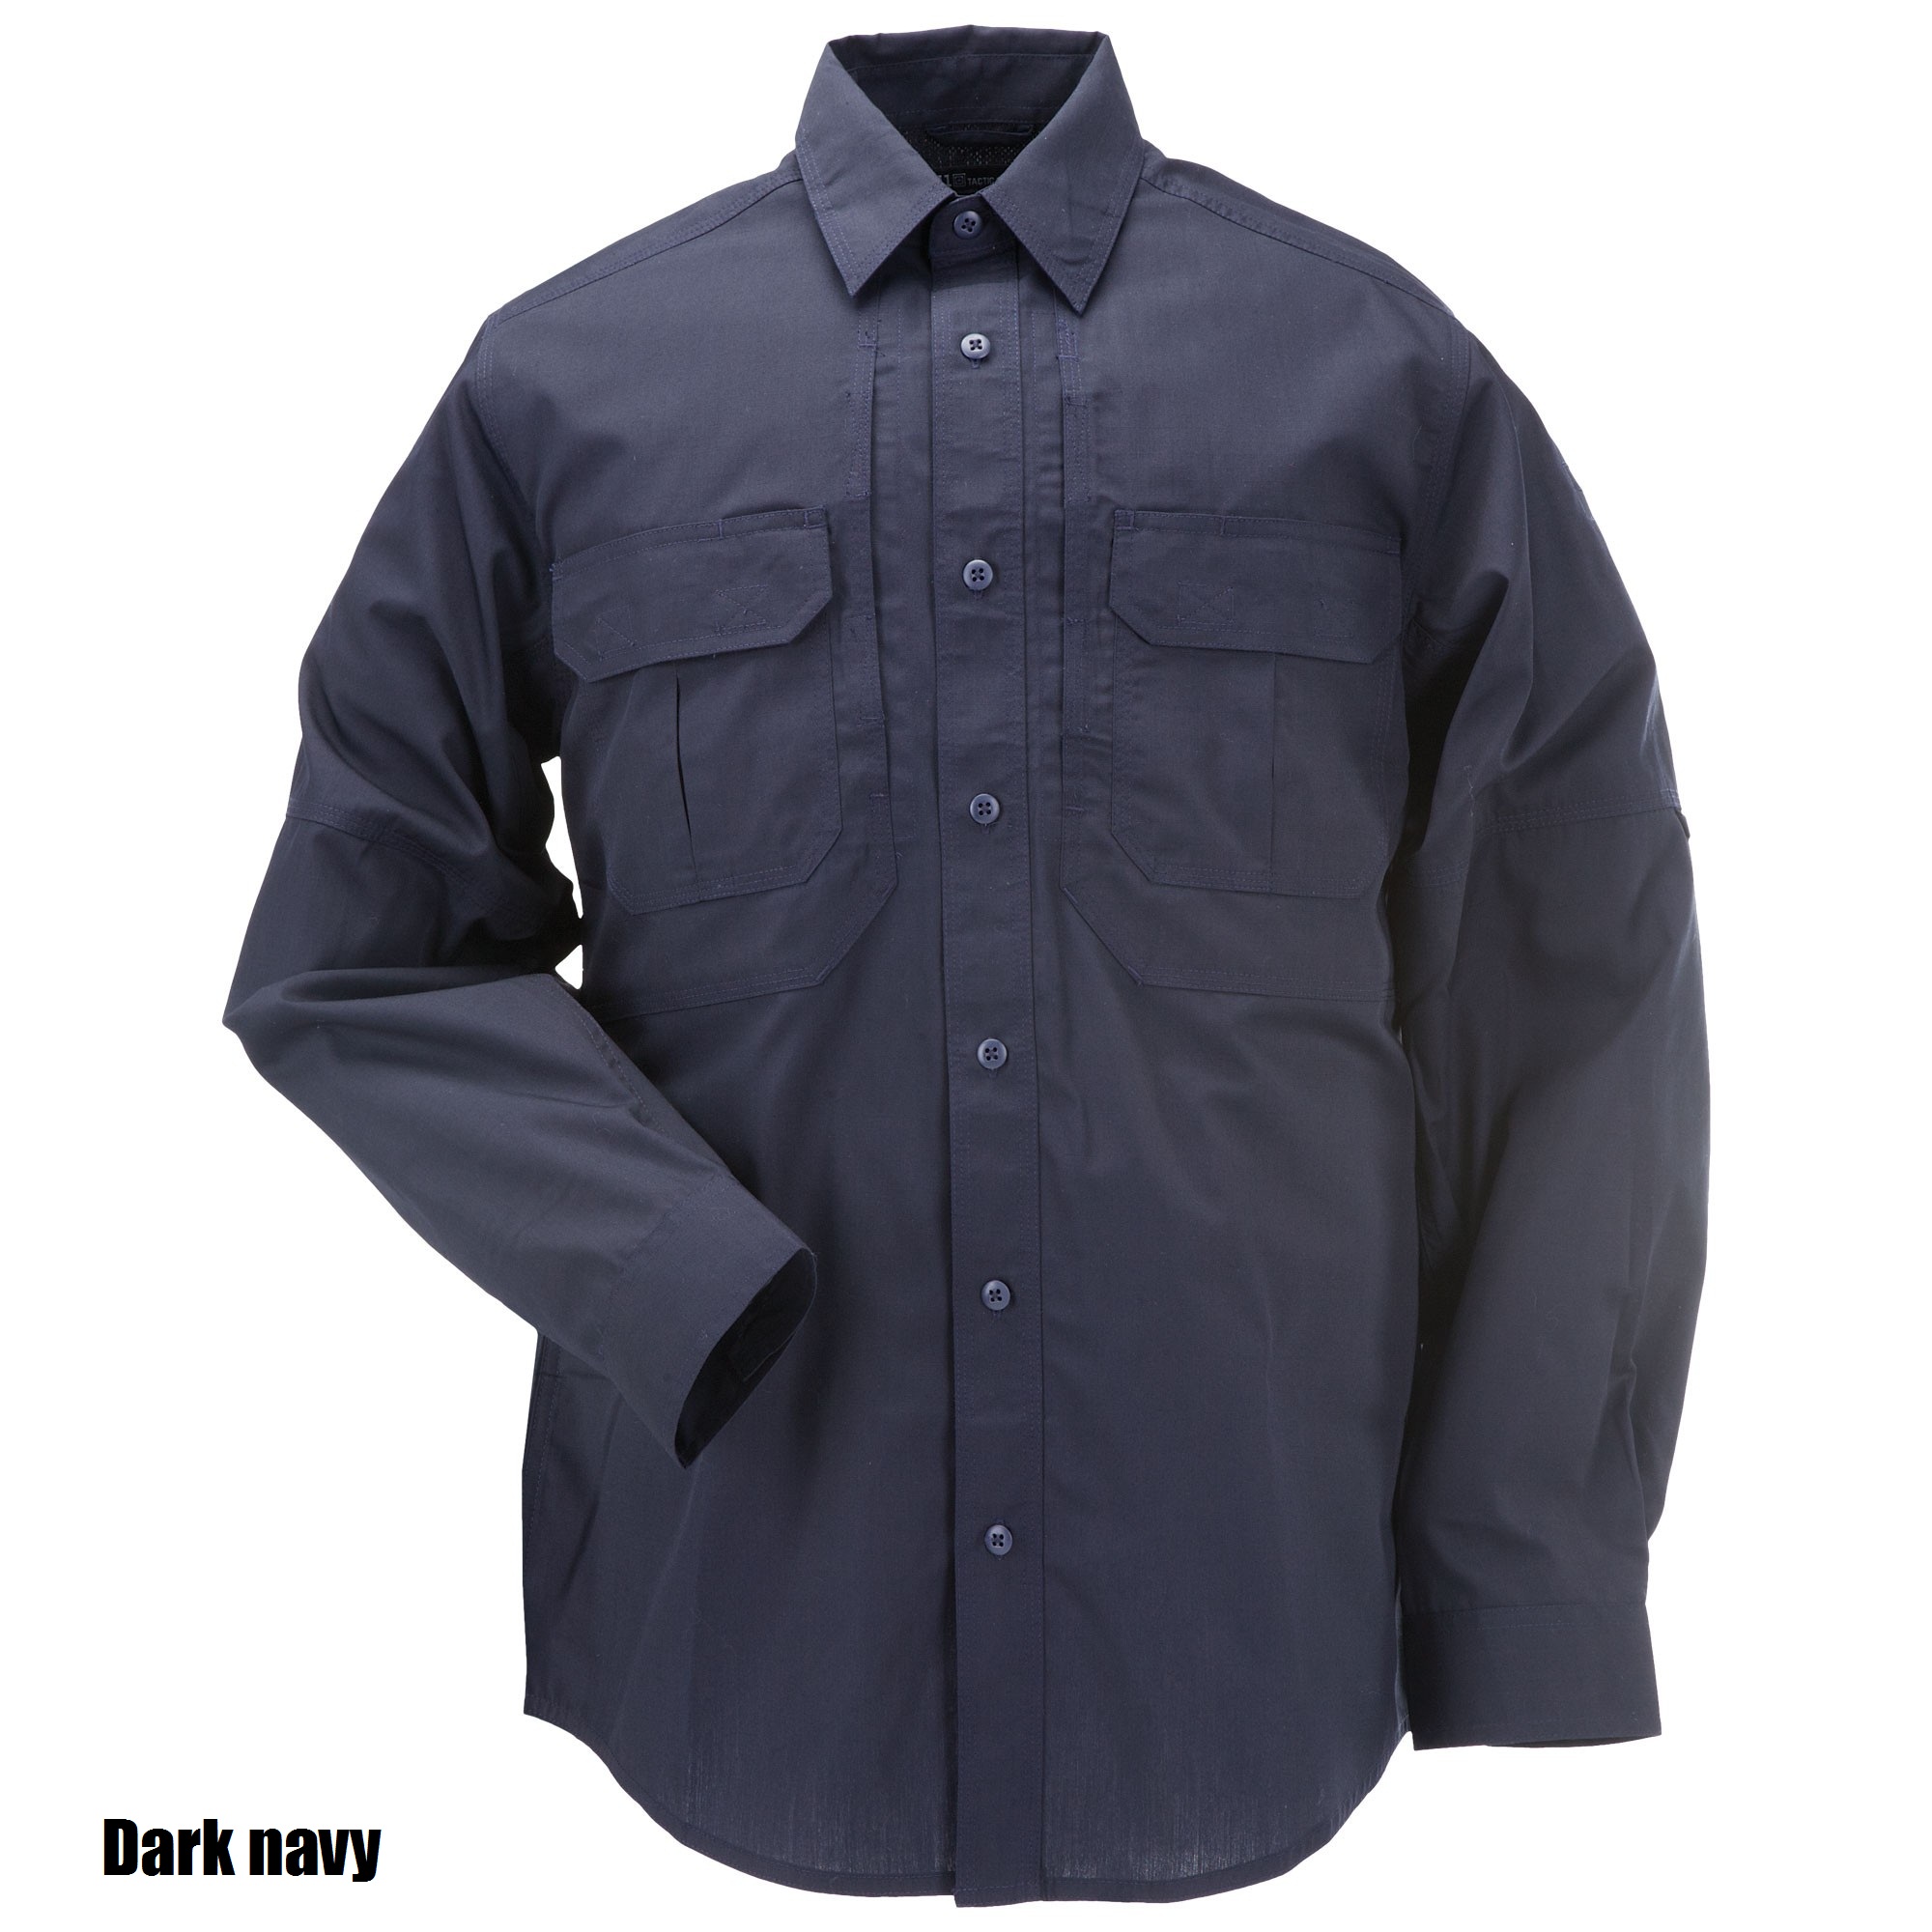 5.11 Taclite Pro Shirt – Long Sleeve